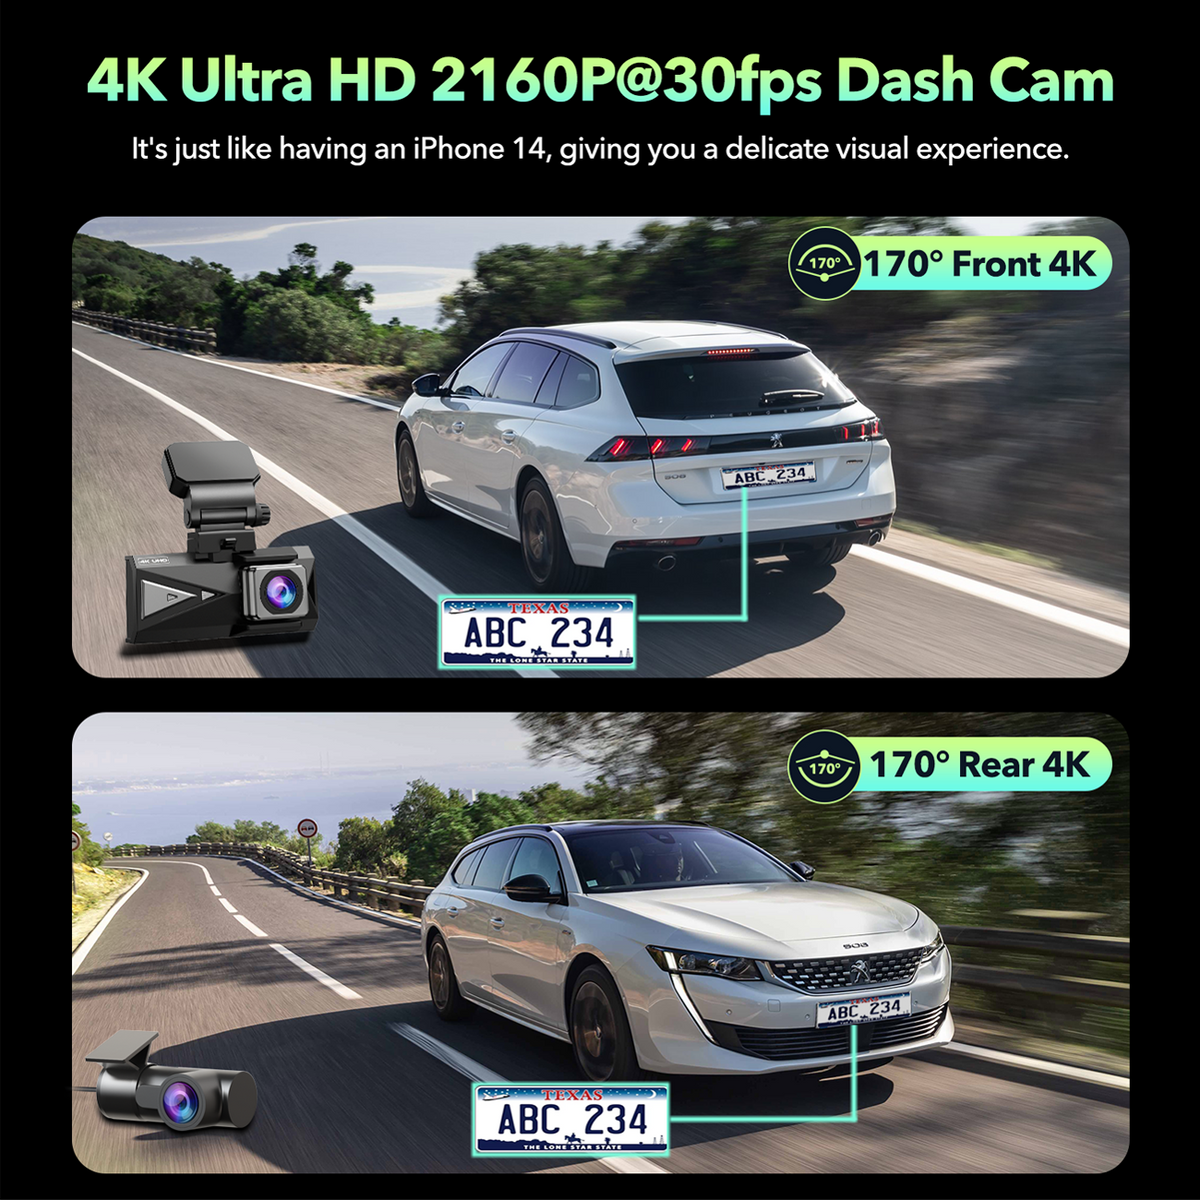 Buy Dash Cam Online, Campark DC30A Dash Cam